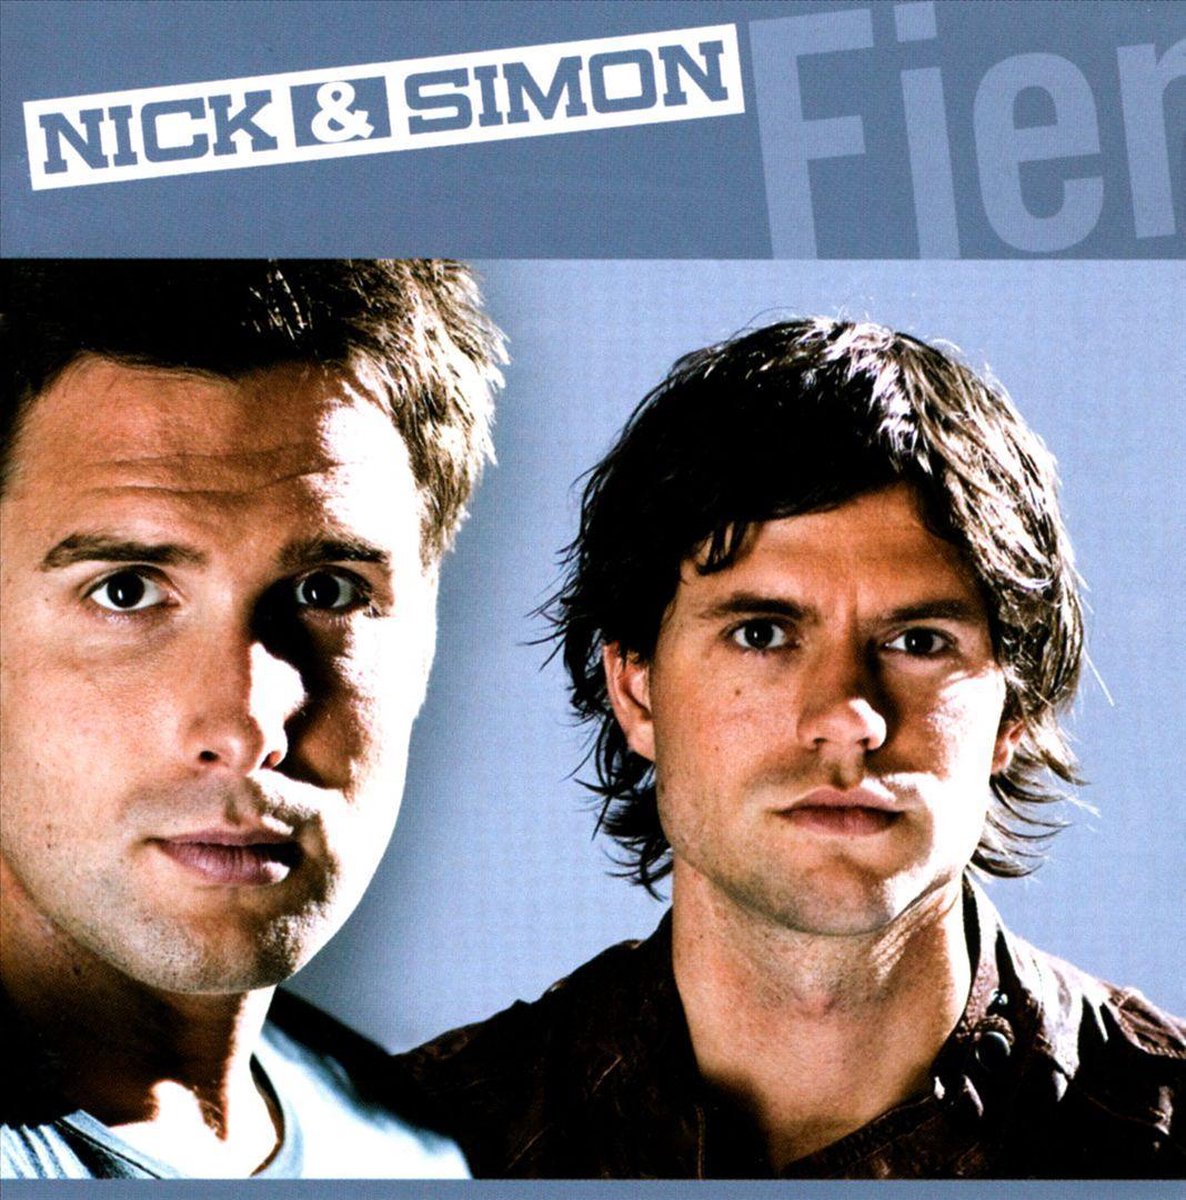 Nick & Simon - Fier (CD) - Nick & Simon